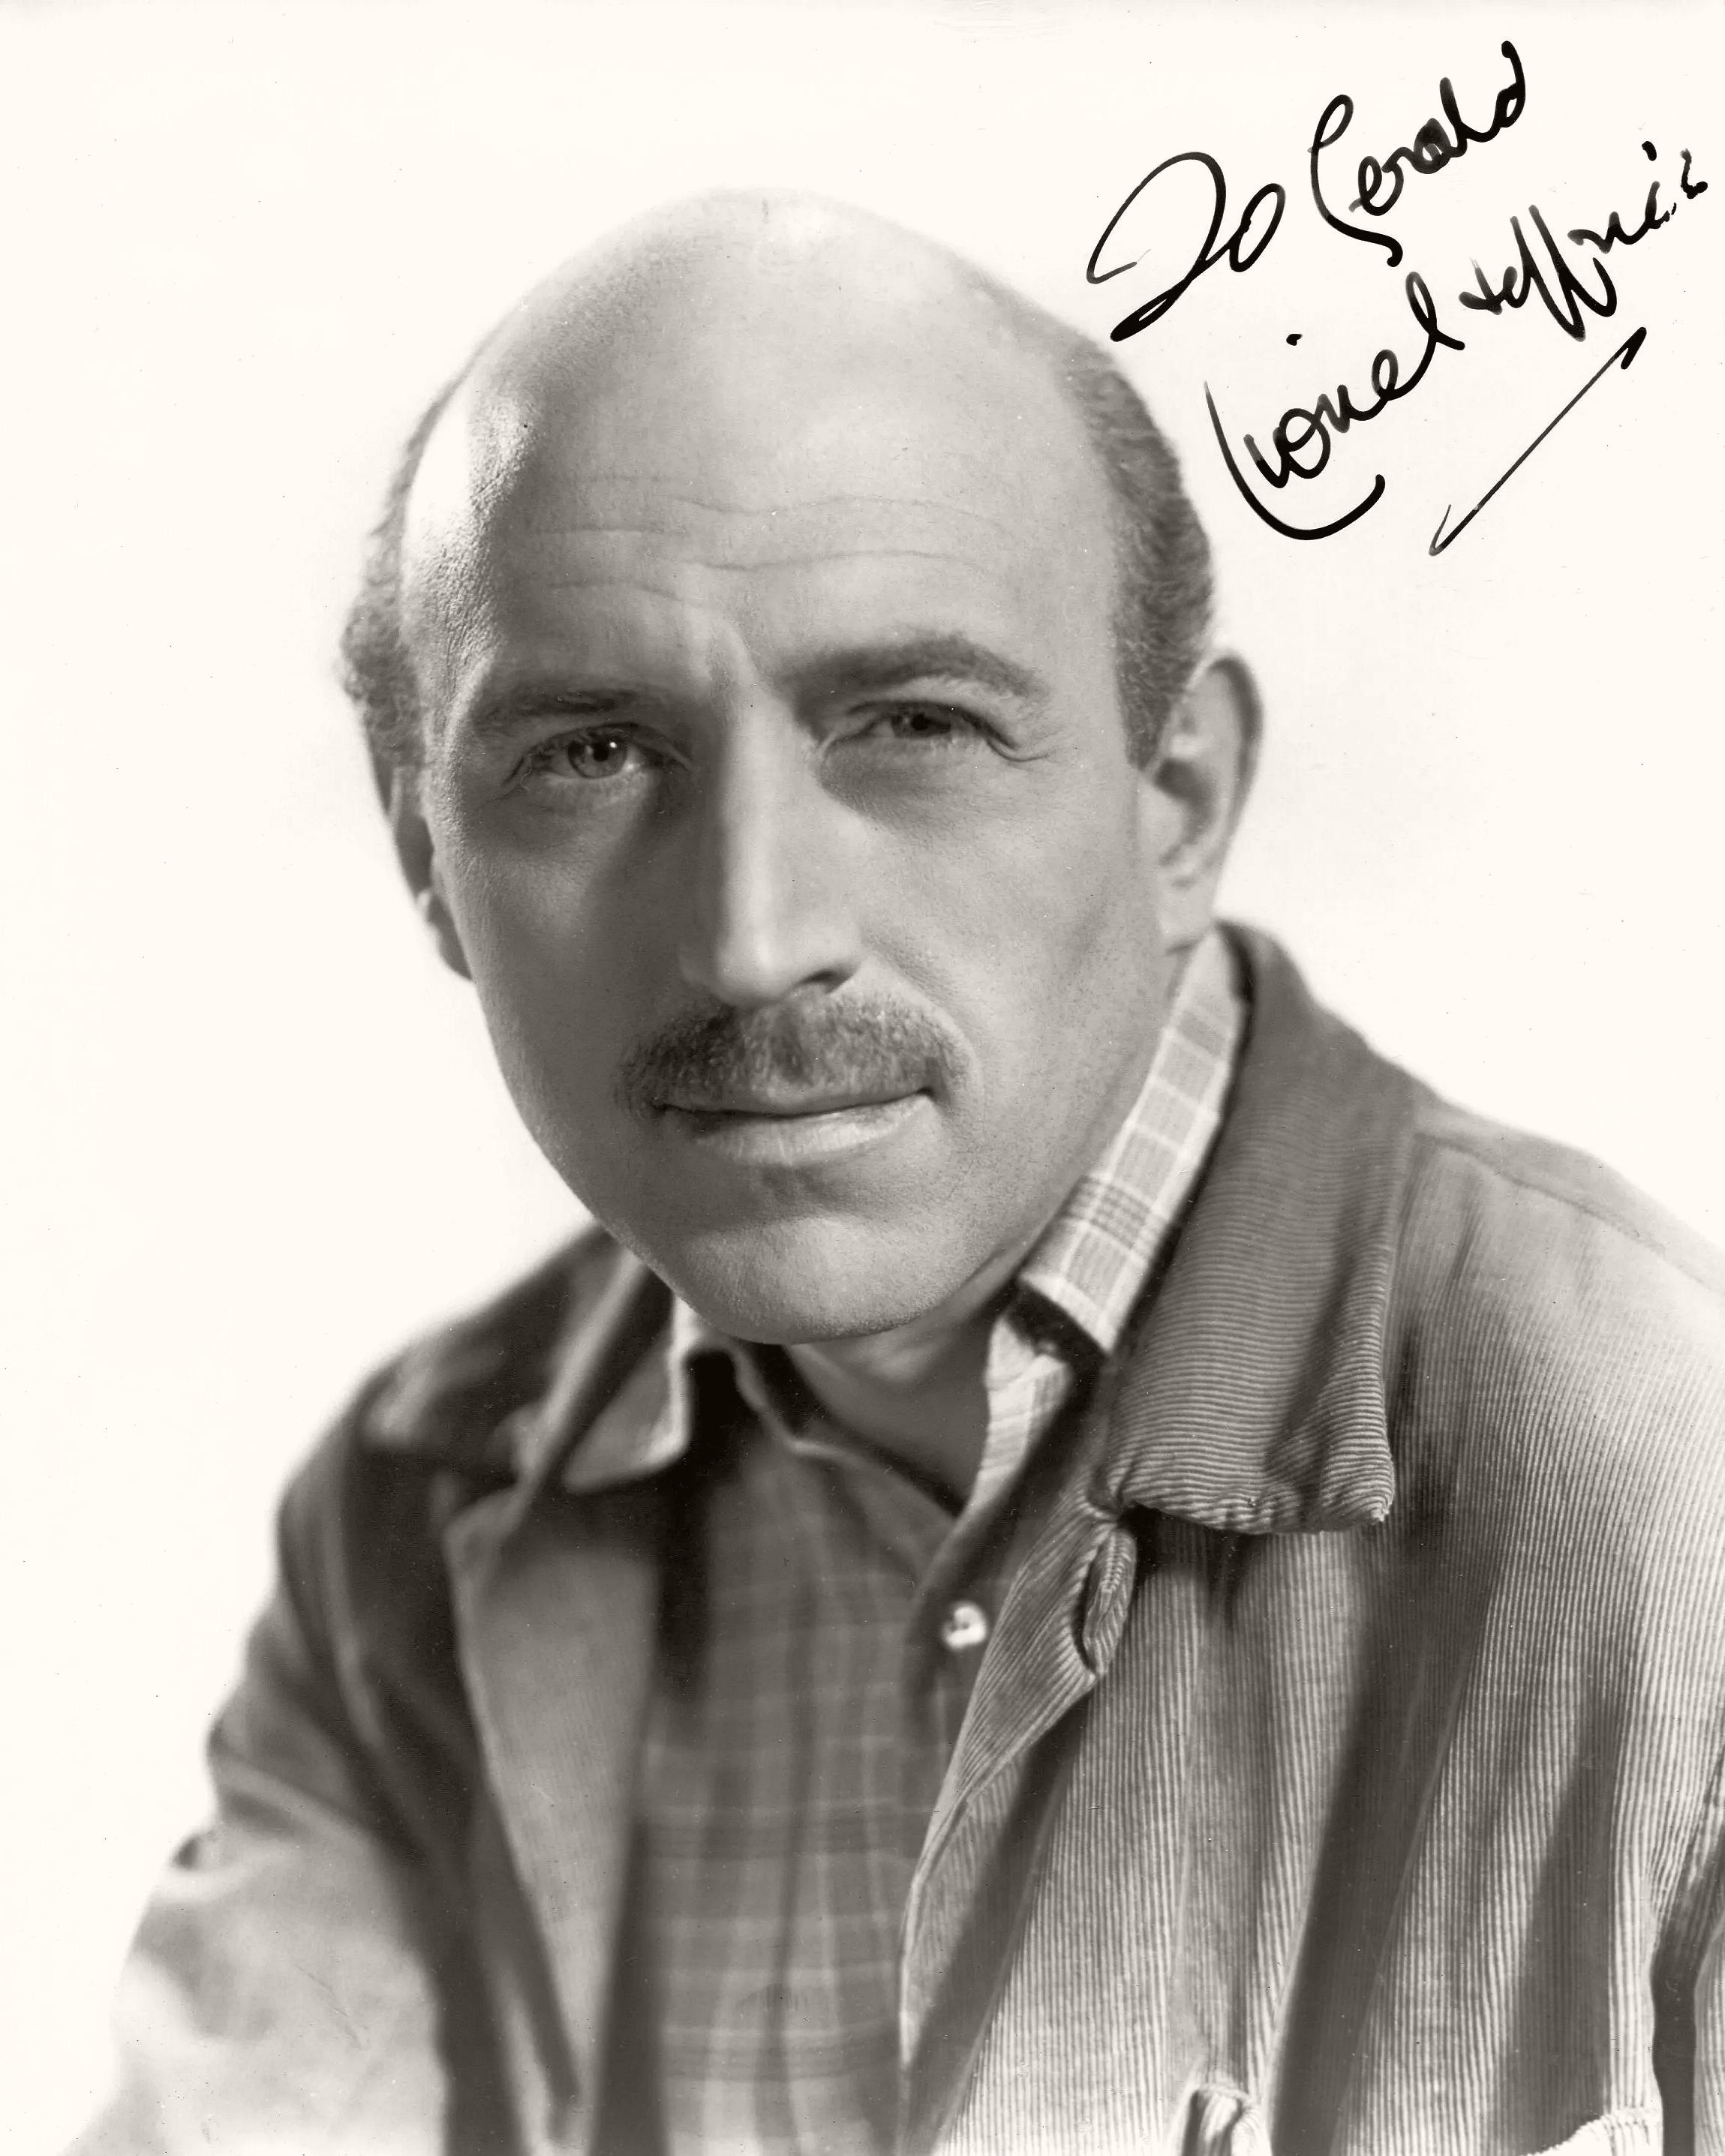 Autographed photo of British actor, Lionel Jeffries (1)